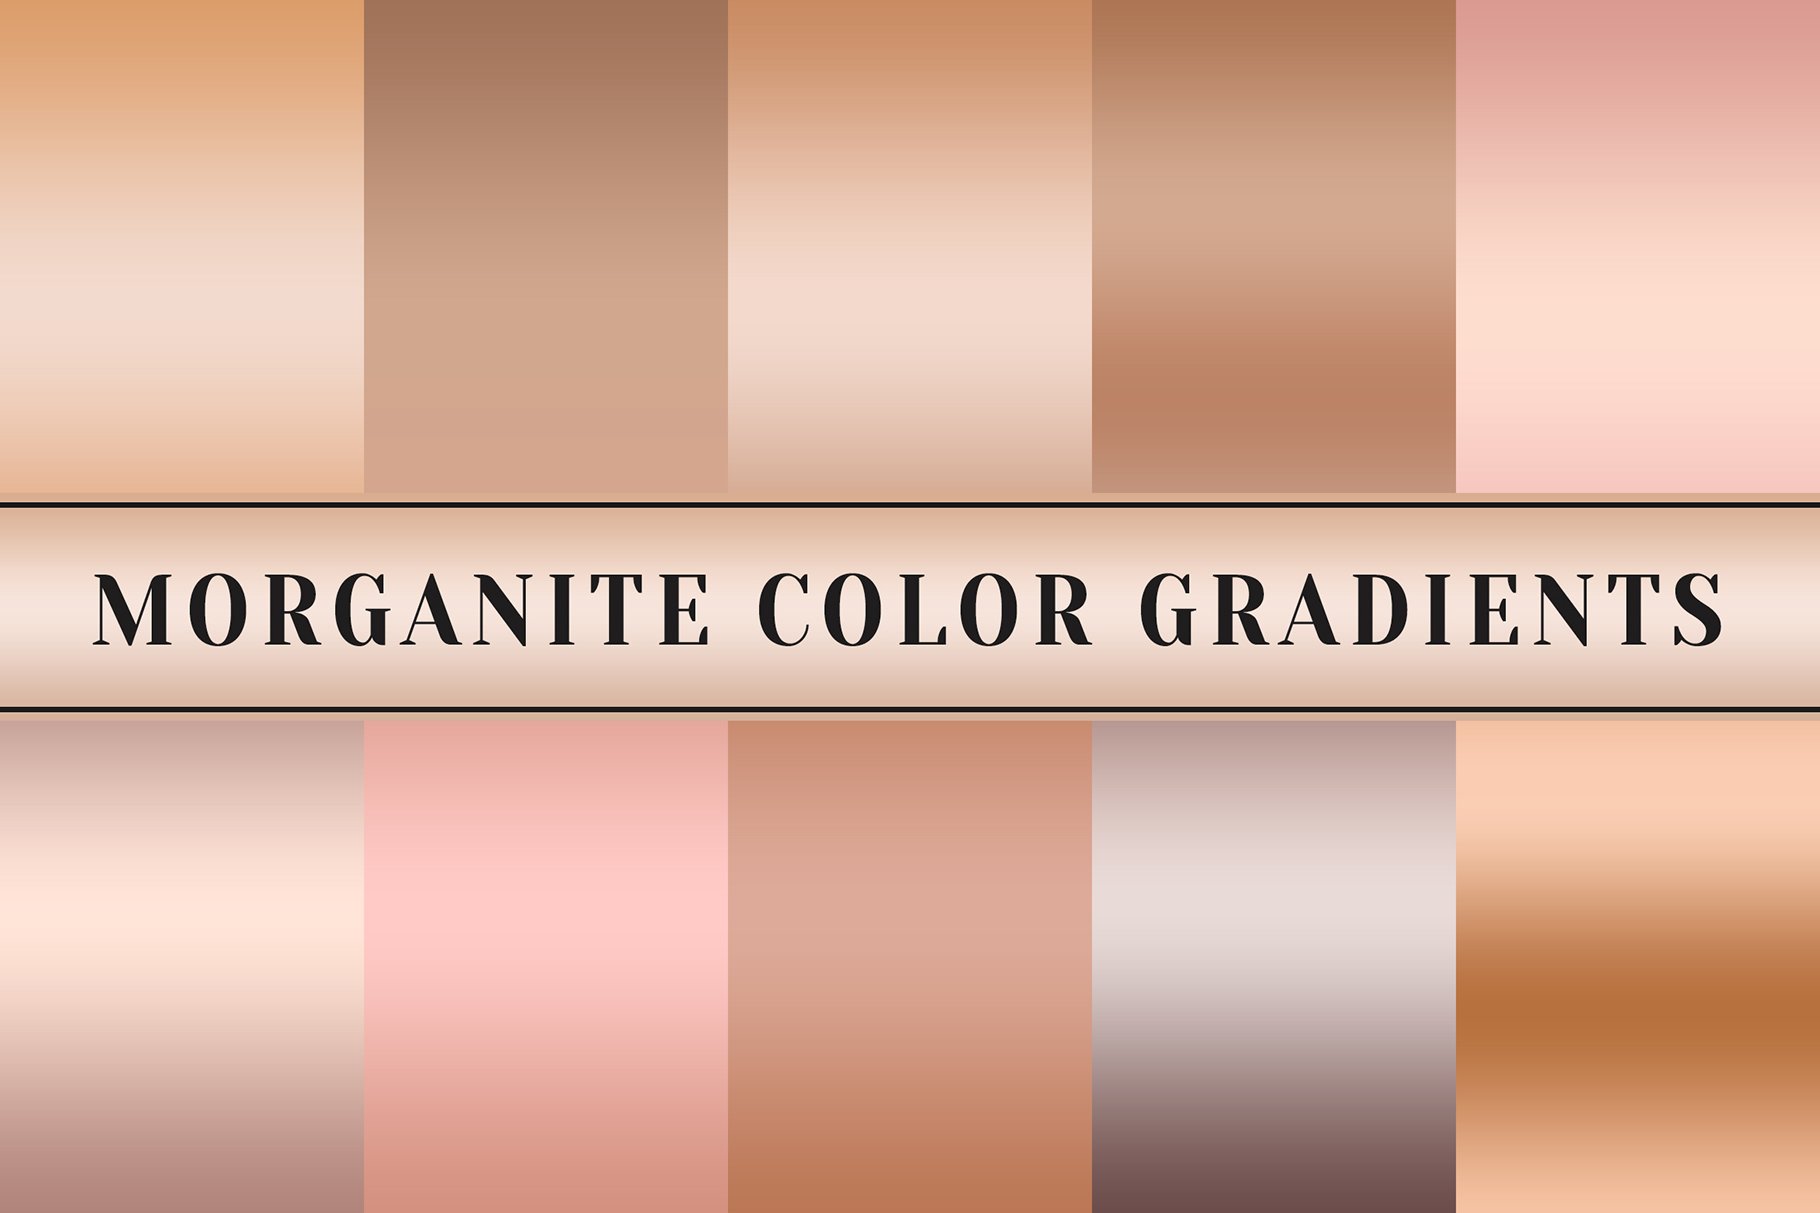 Morganite Color Gradients cover image.